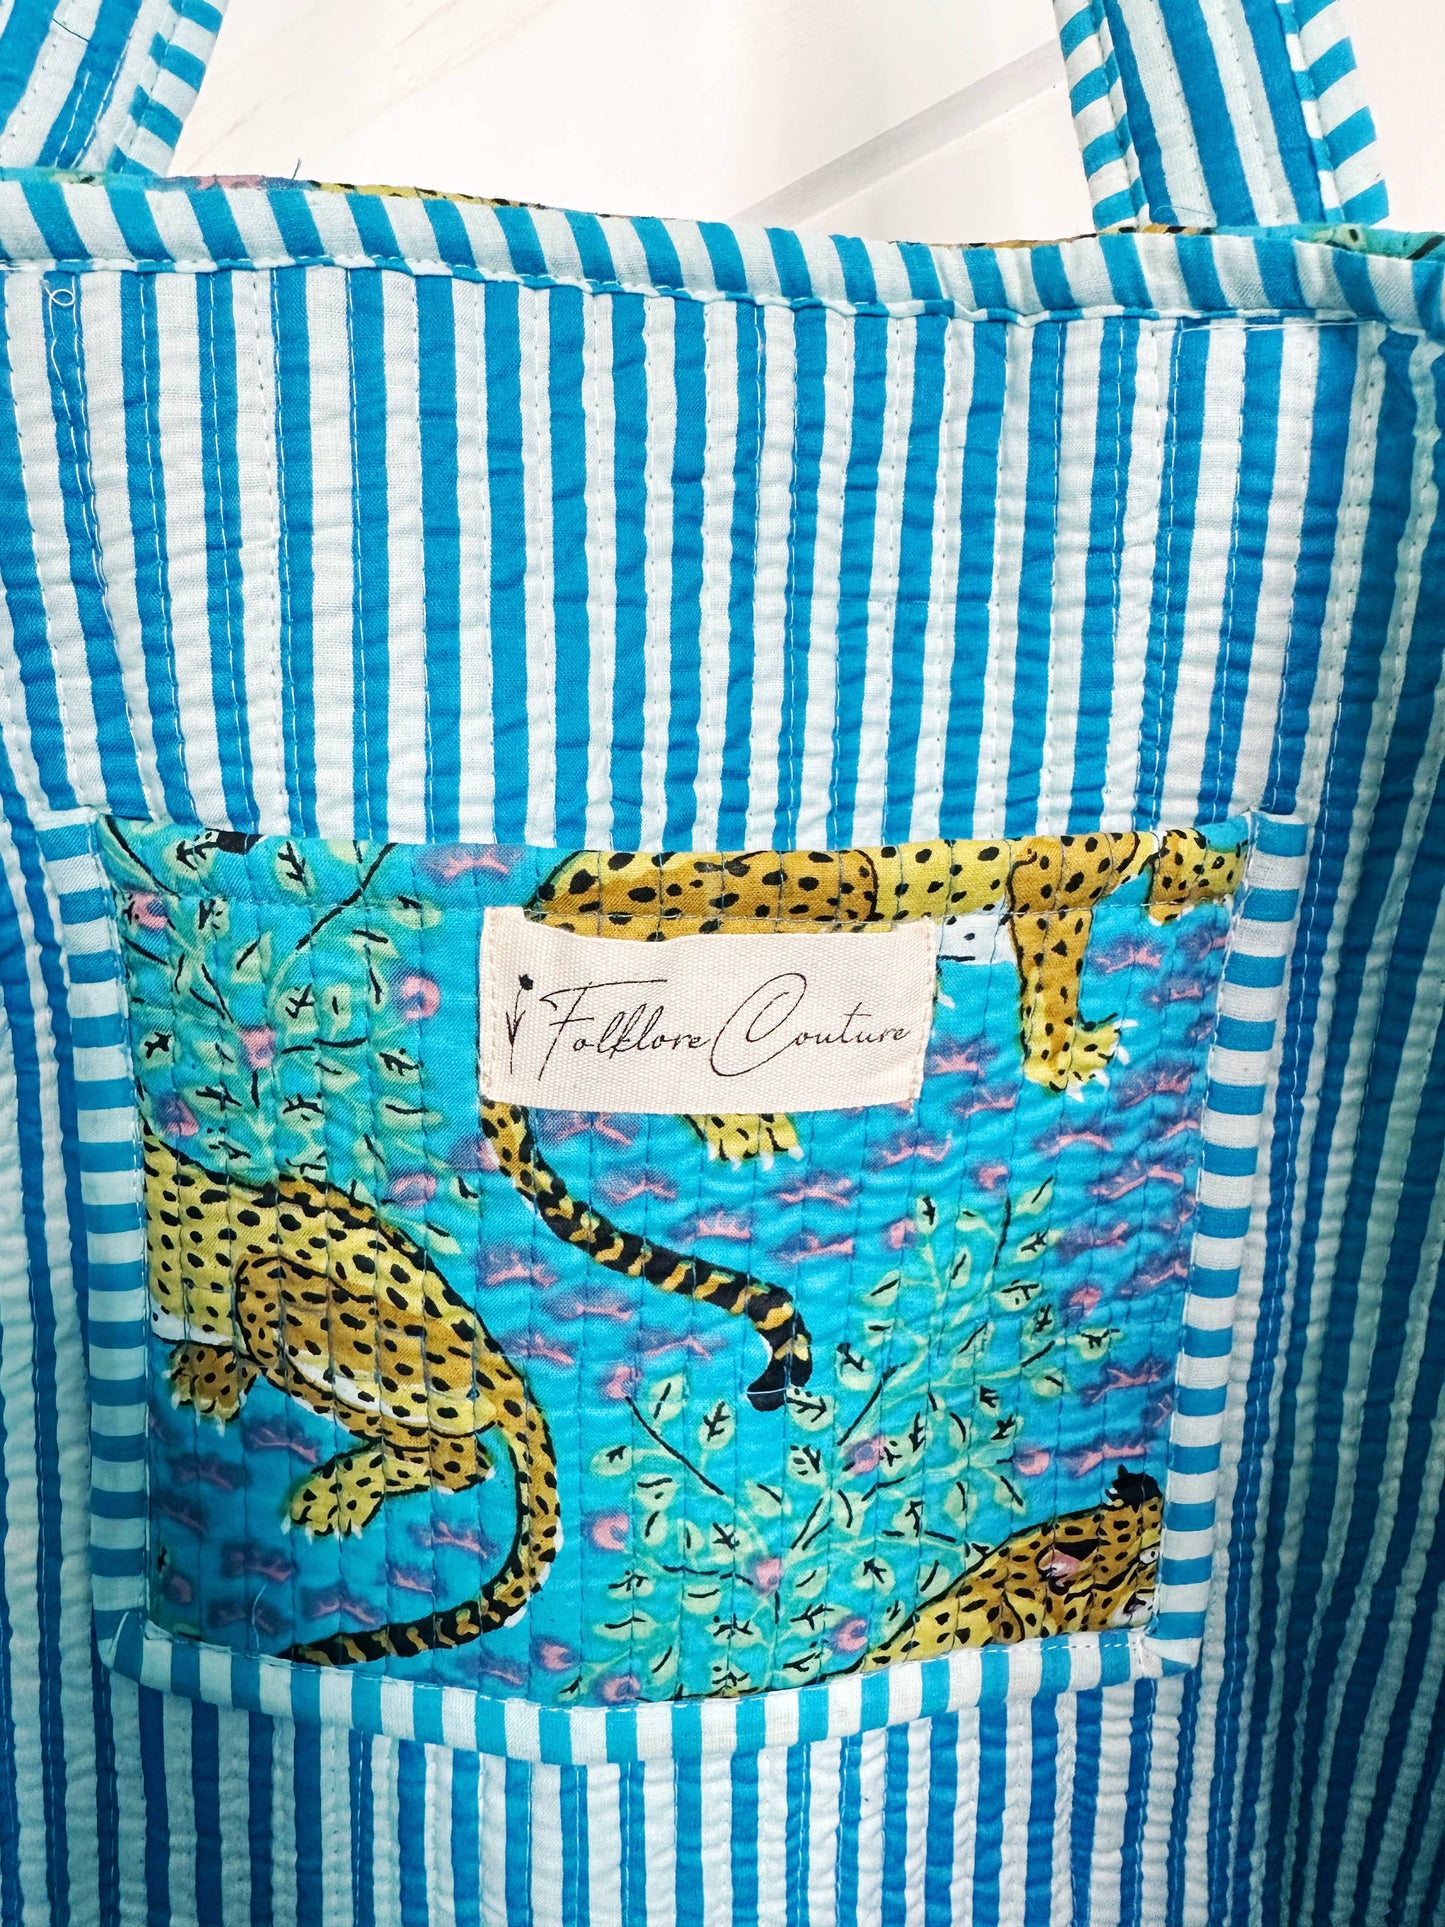 Cotton Quilted Block Print Tote Bag - Aqua Jaguars Leopards